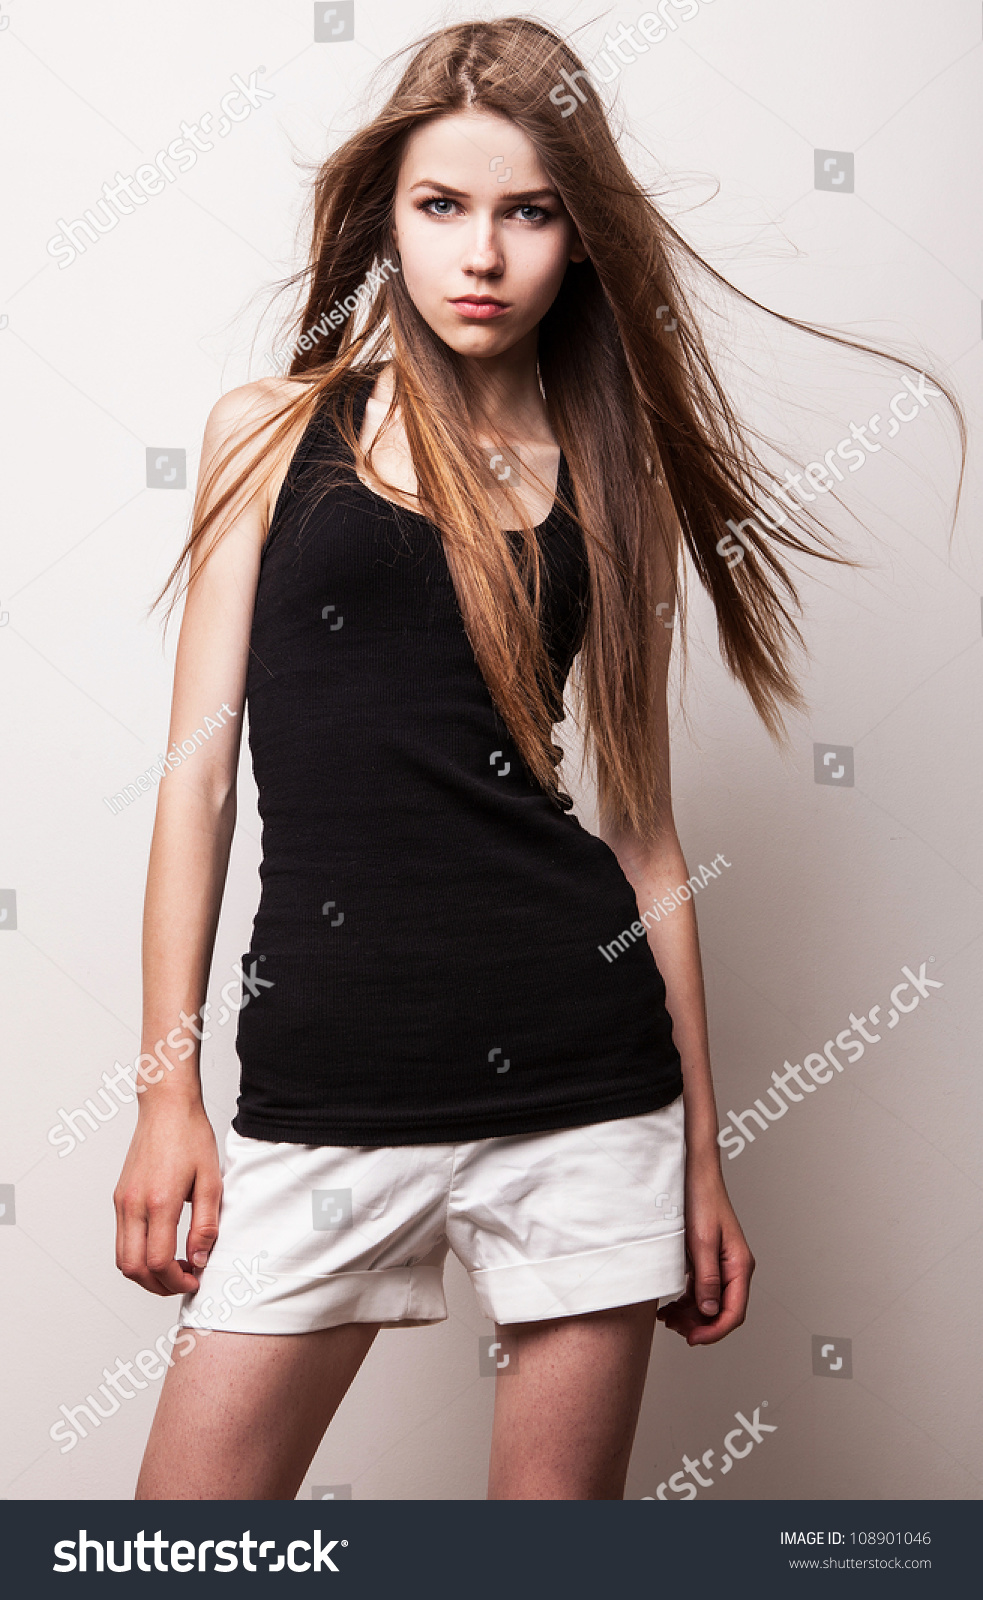 Young Sensual Model Girl Pose Studio Stock Photo 108901046 - Shutterstock